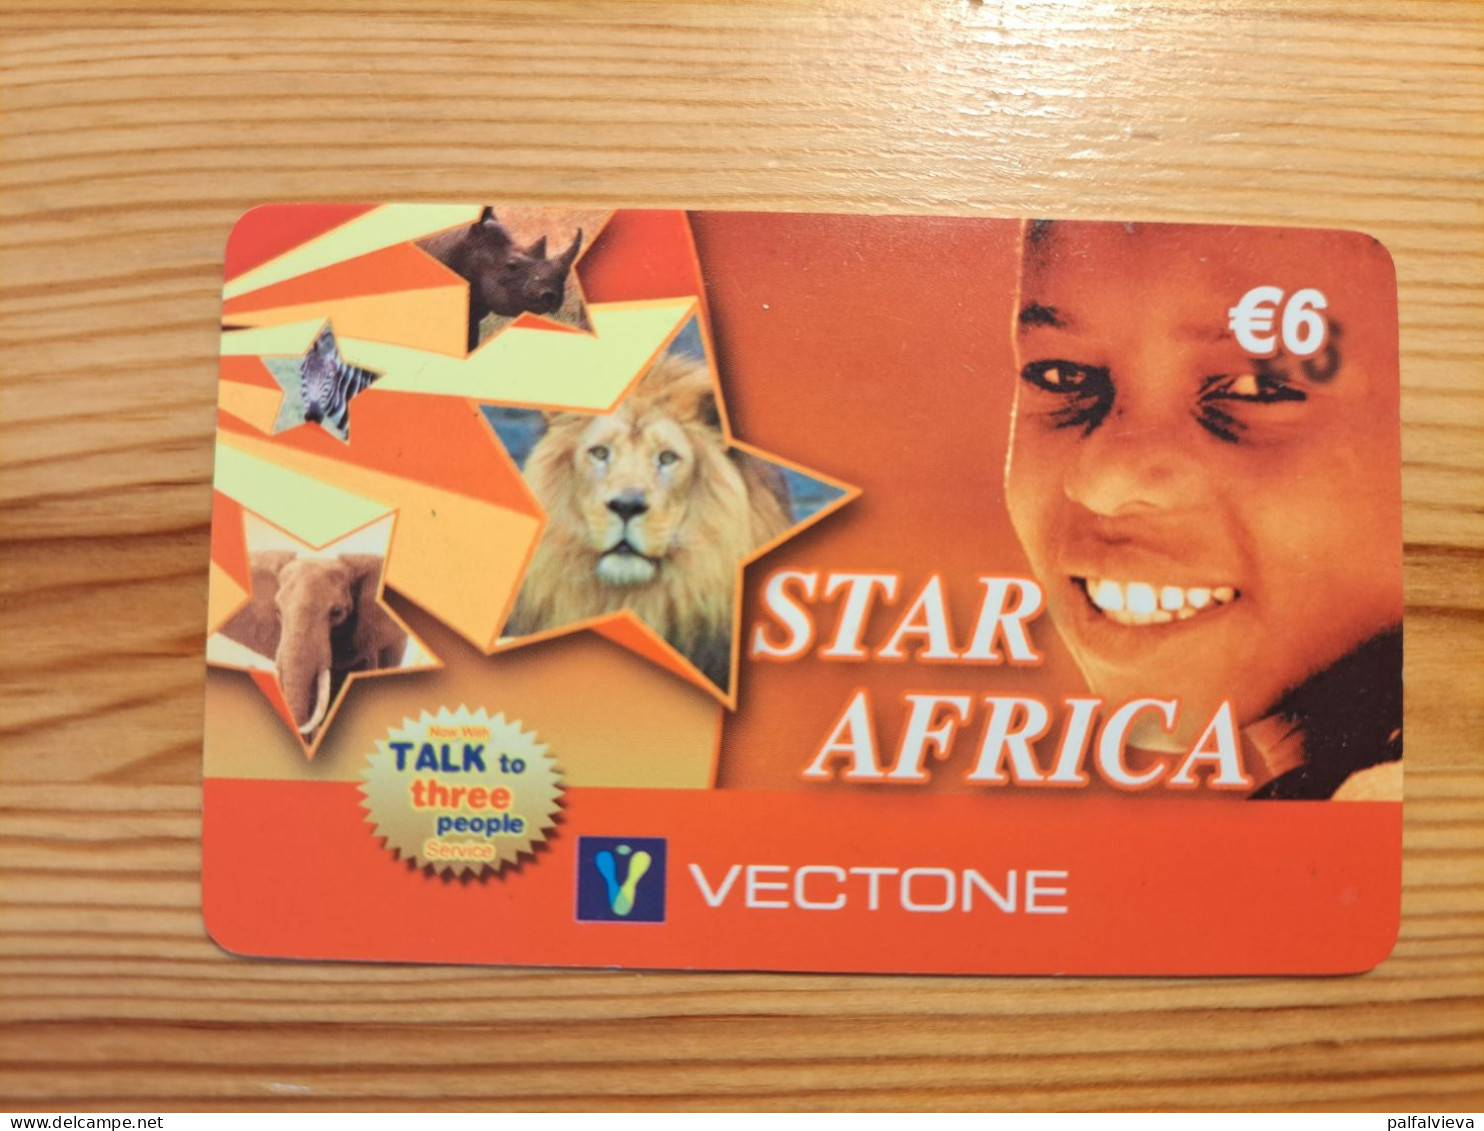 Prepaid Phonecard Netherlands, Star Africa - Lion, Elephant, Zebra, Rhino - GSM-Kaarten, Bijvulling & Vooraf Betaalde